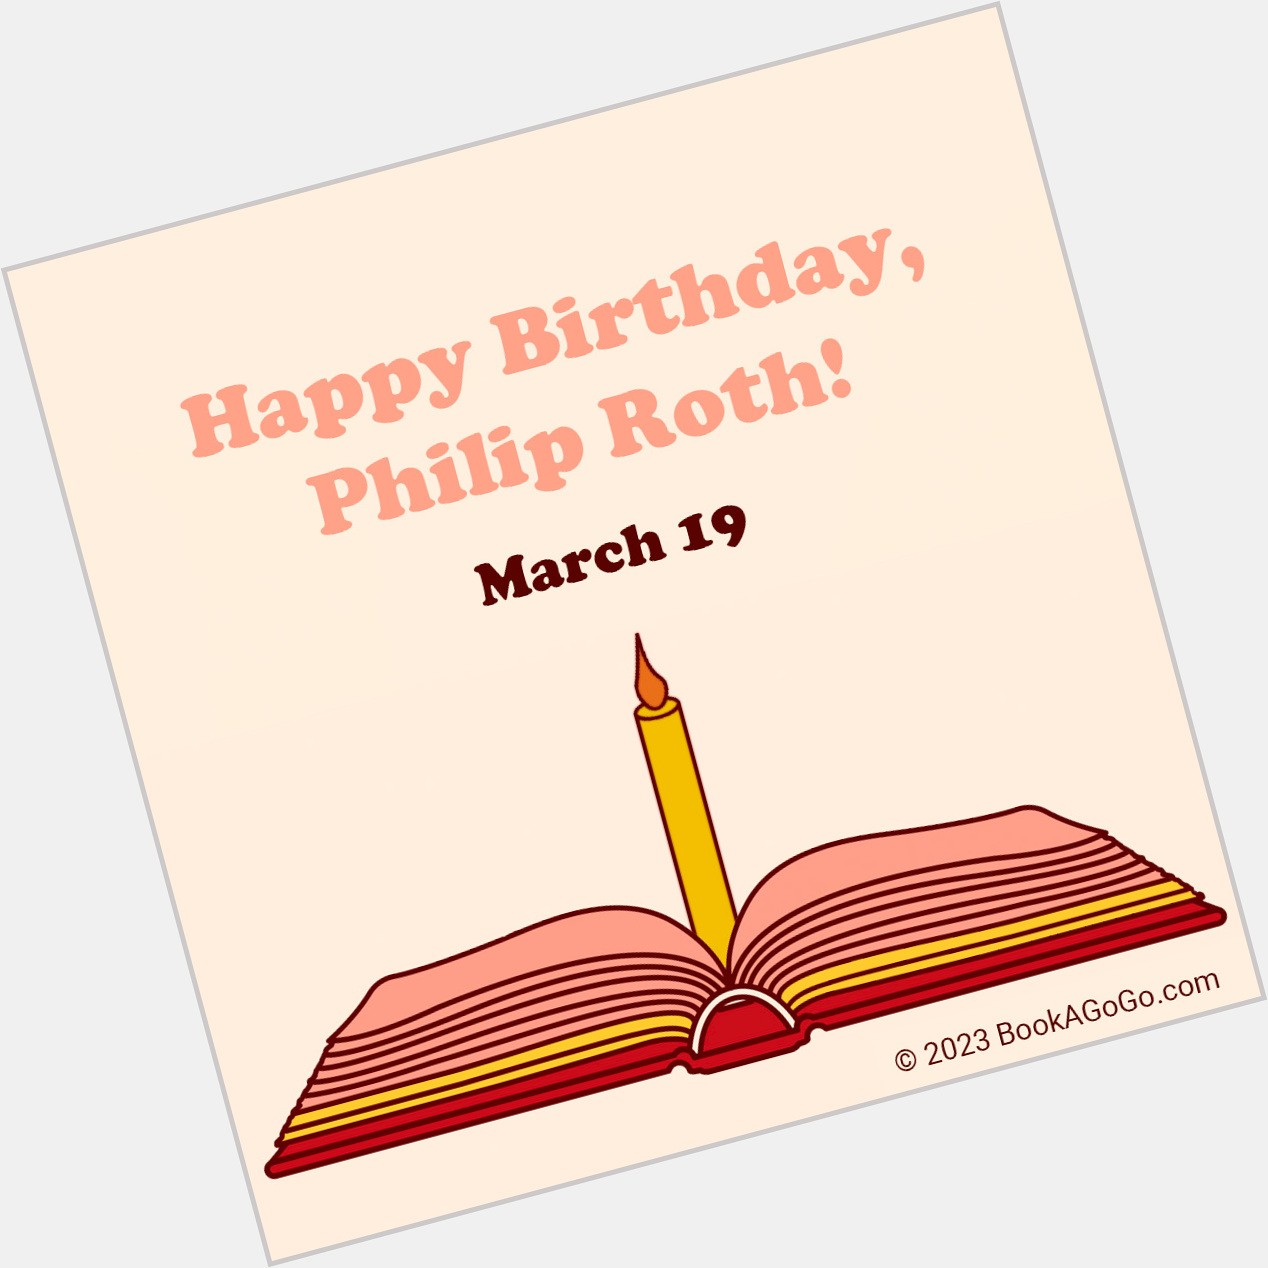 Happy birthday, Philip Roth!  